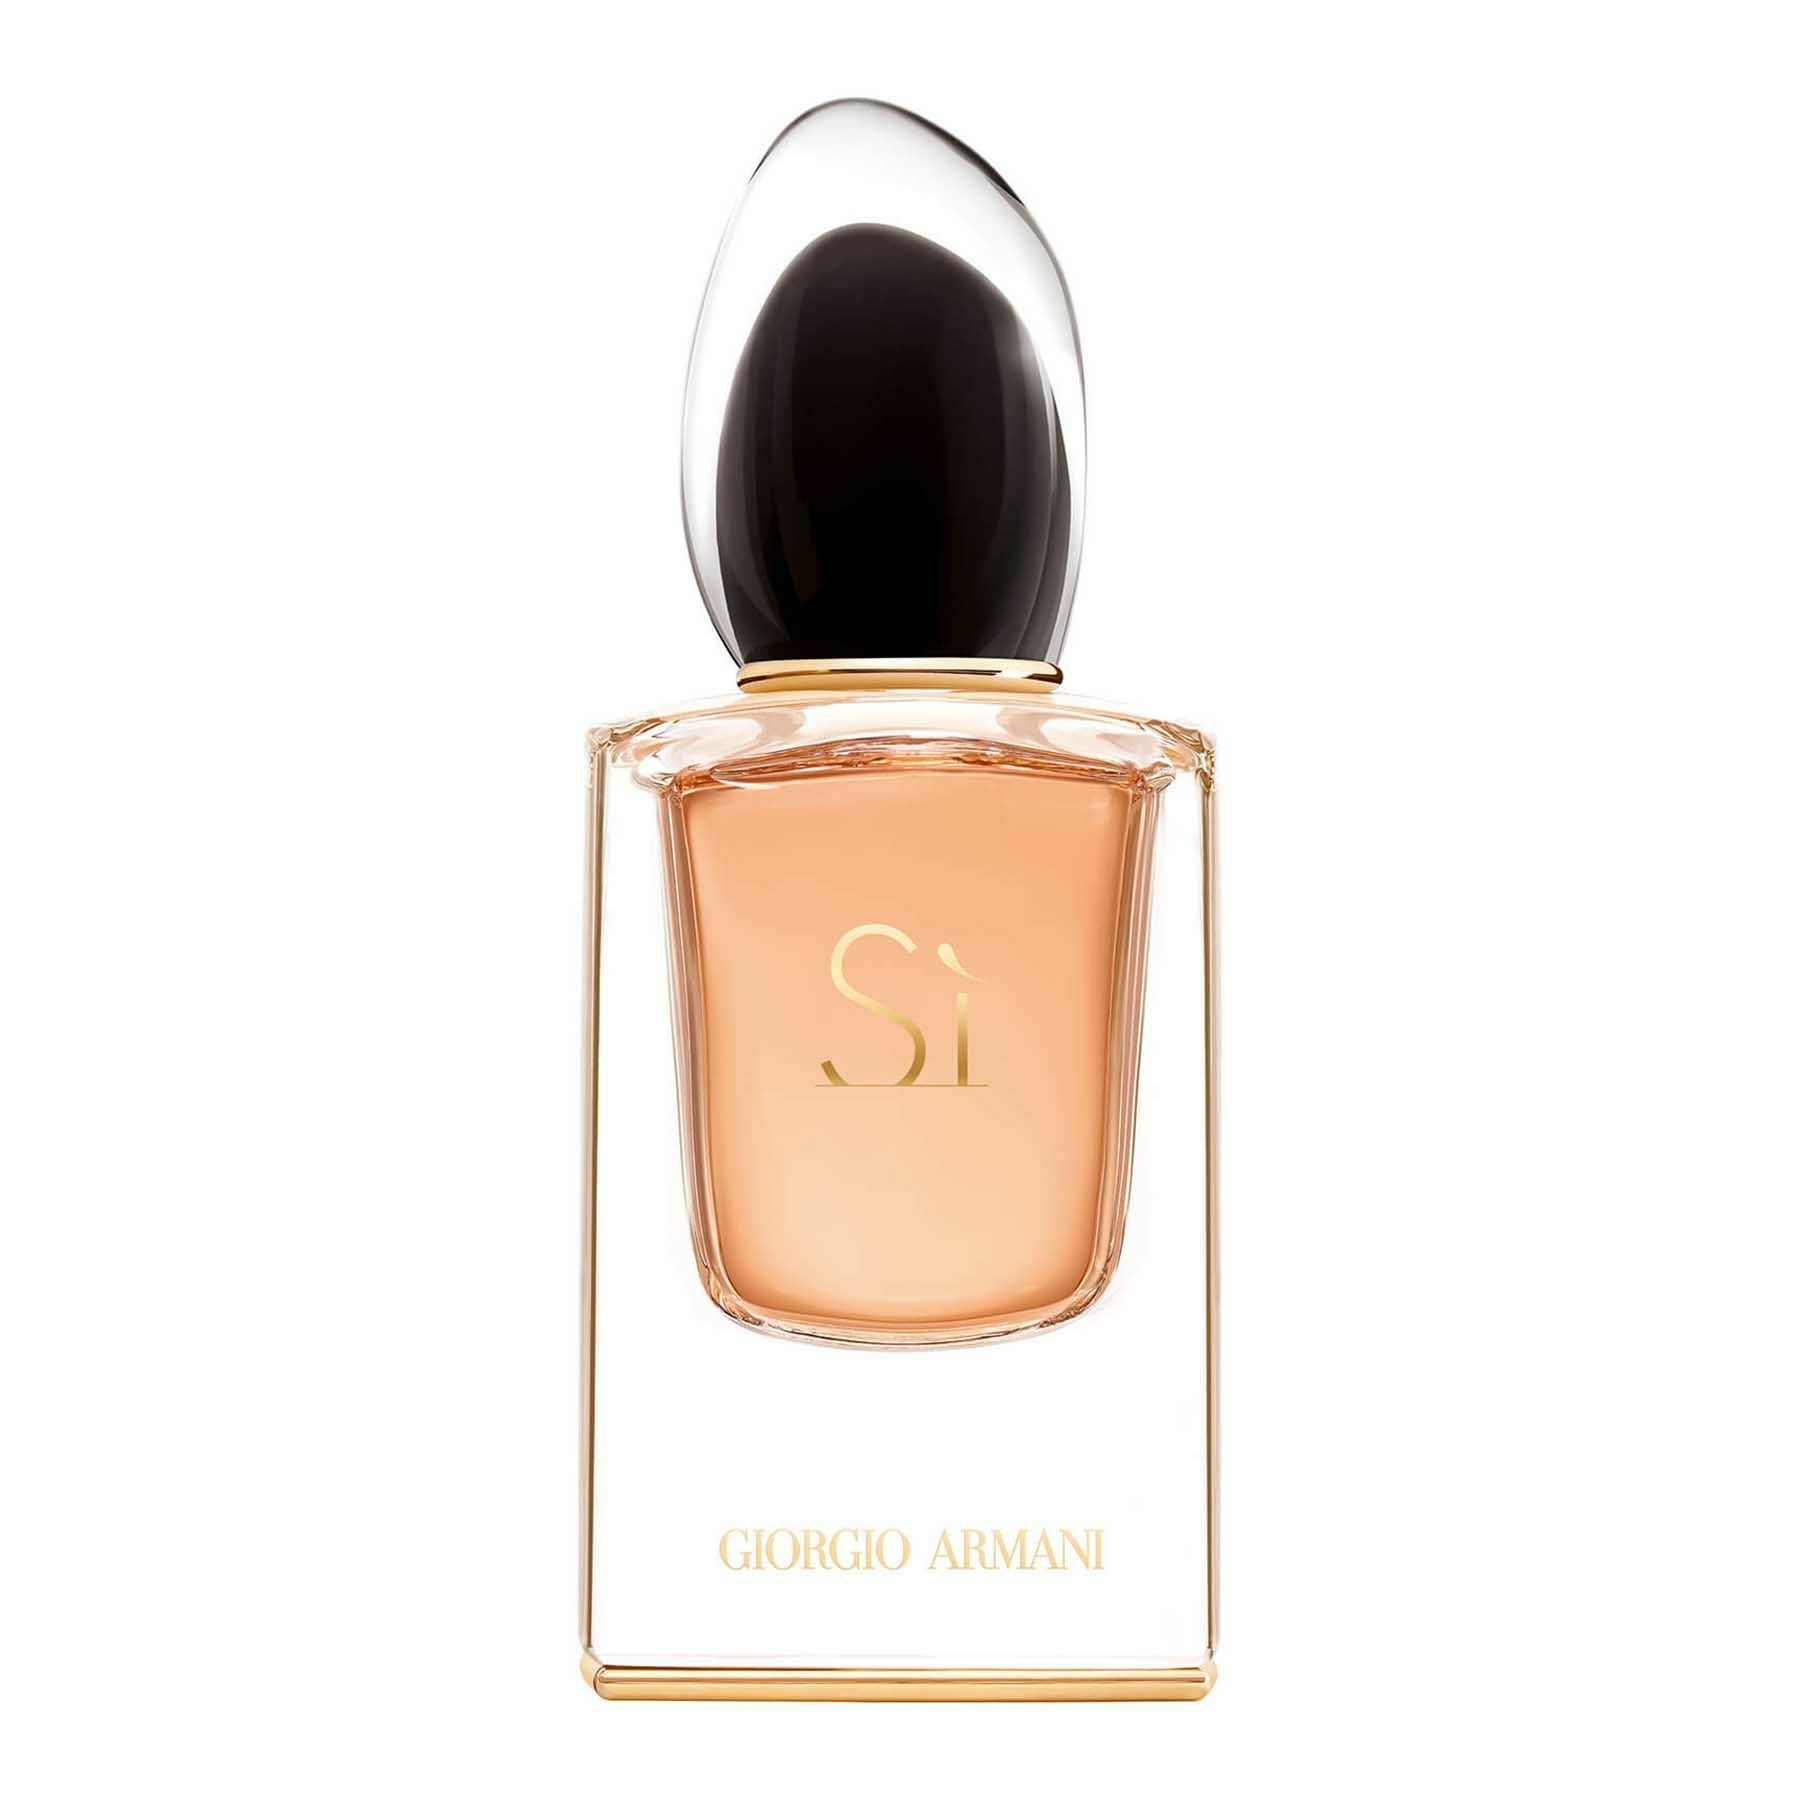 Giorgio Armani Si Le Parfum for Women - Eau De Parfum